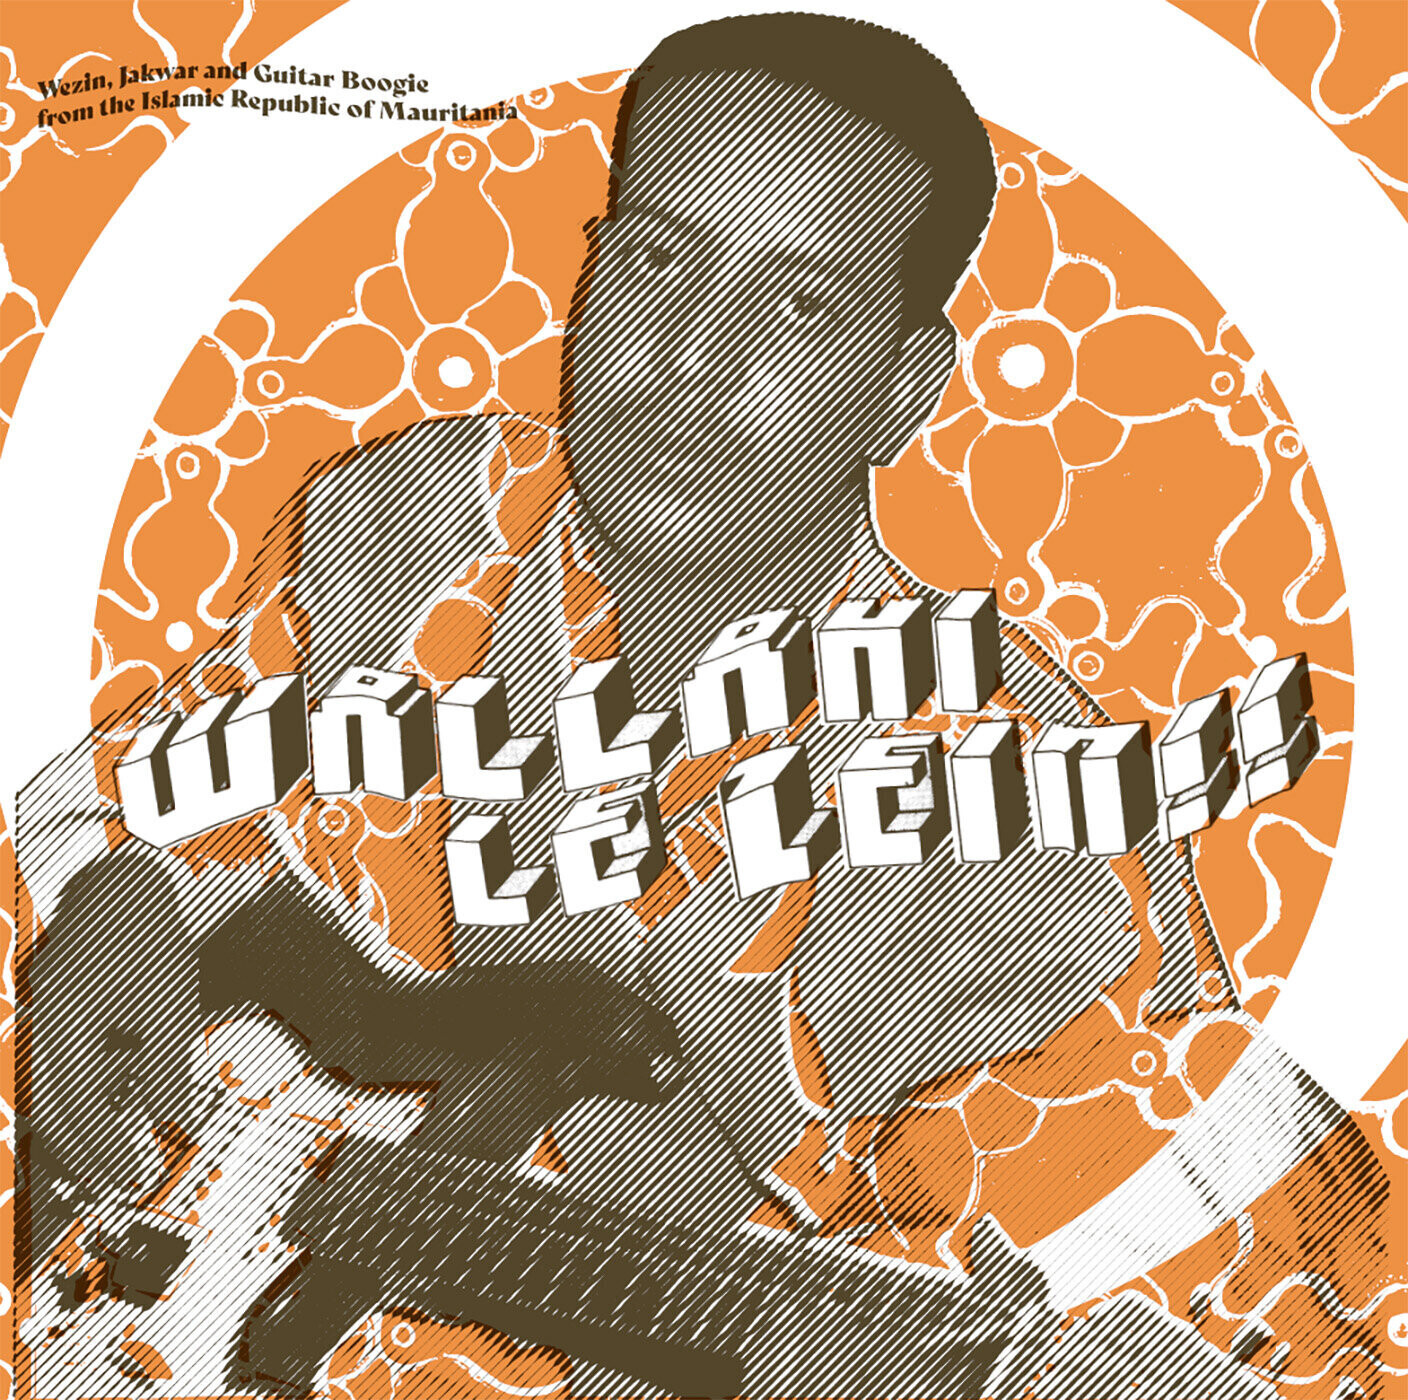 Various "Wallahi Le Zein!! - Wezin, Jakwar And Guitar Boogie From The Islamic Republic Of Mauritania"